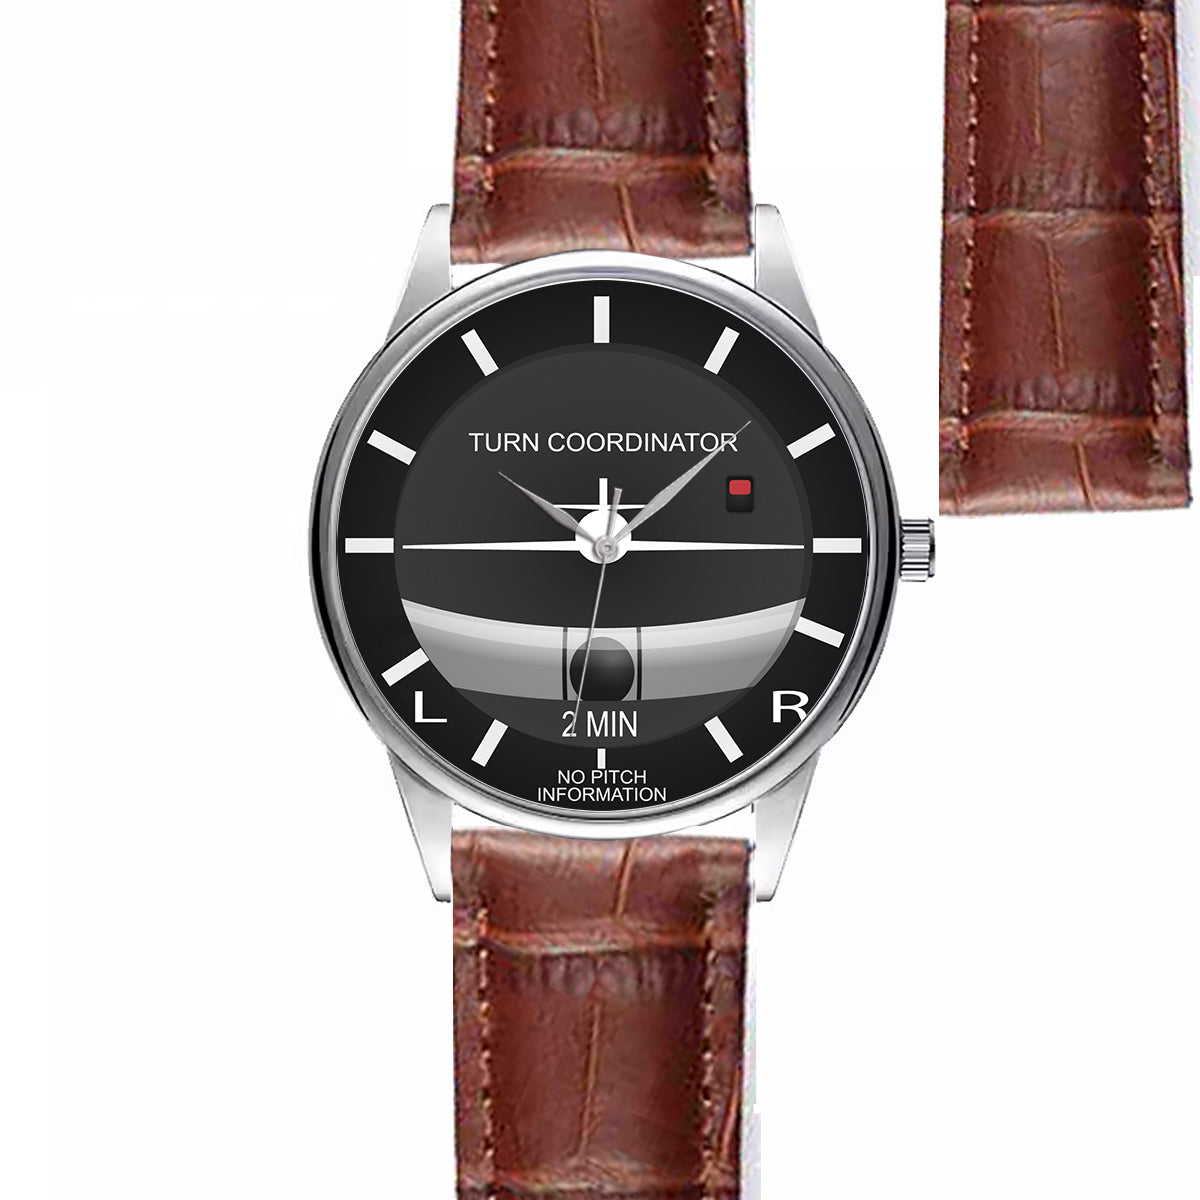 Turn Coordinator Designed Fashion Leather Strap Watches